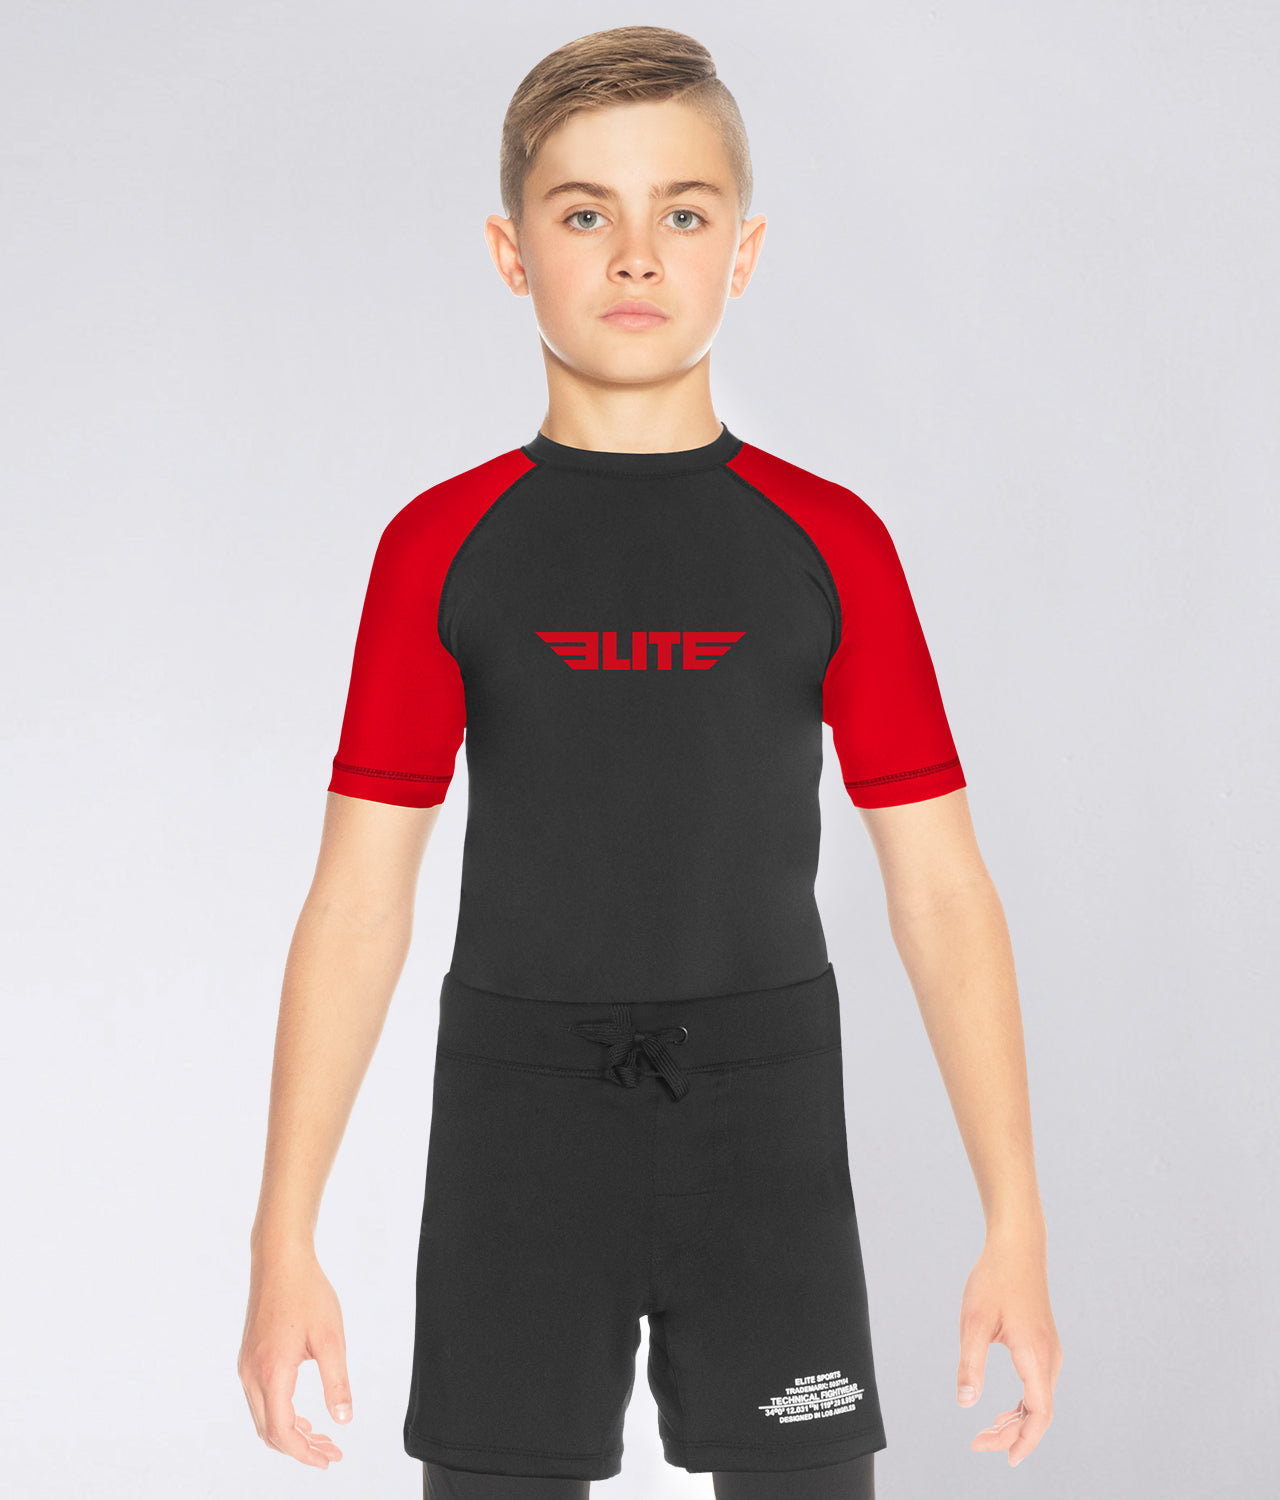 Elite Sports Kids' Standard Red Short Sleeve Training Rash Guard